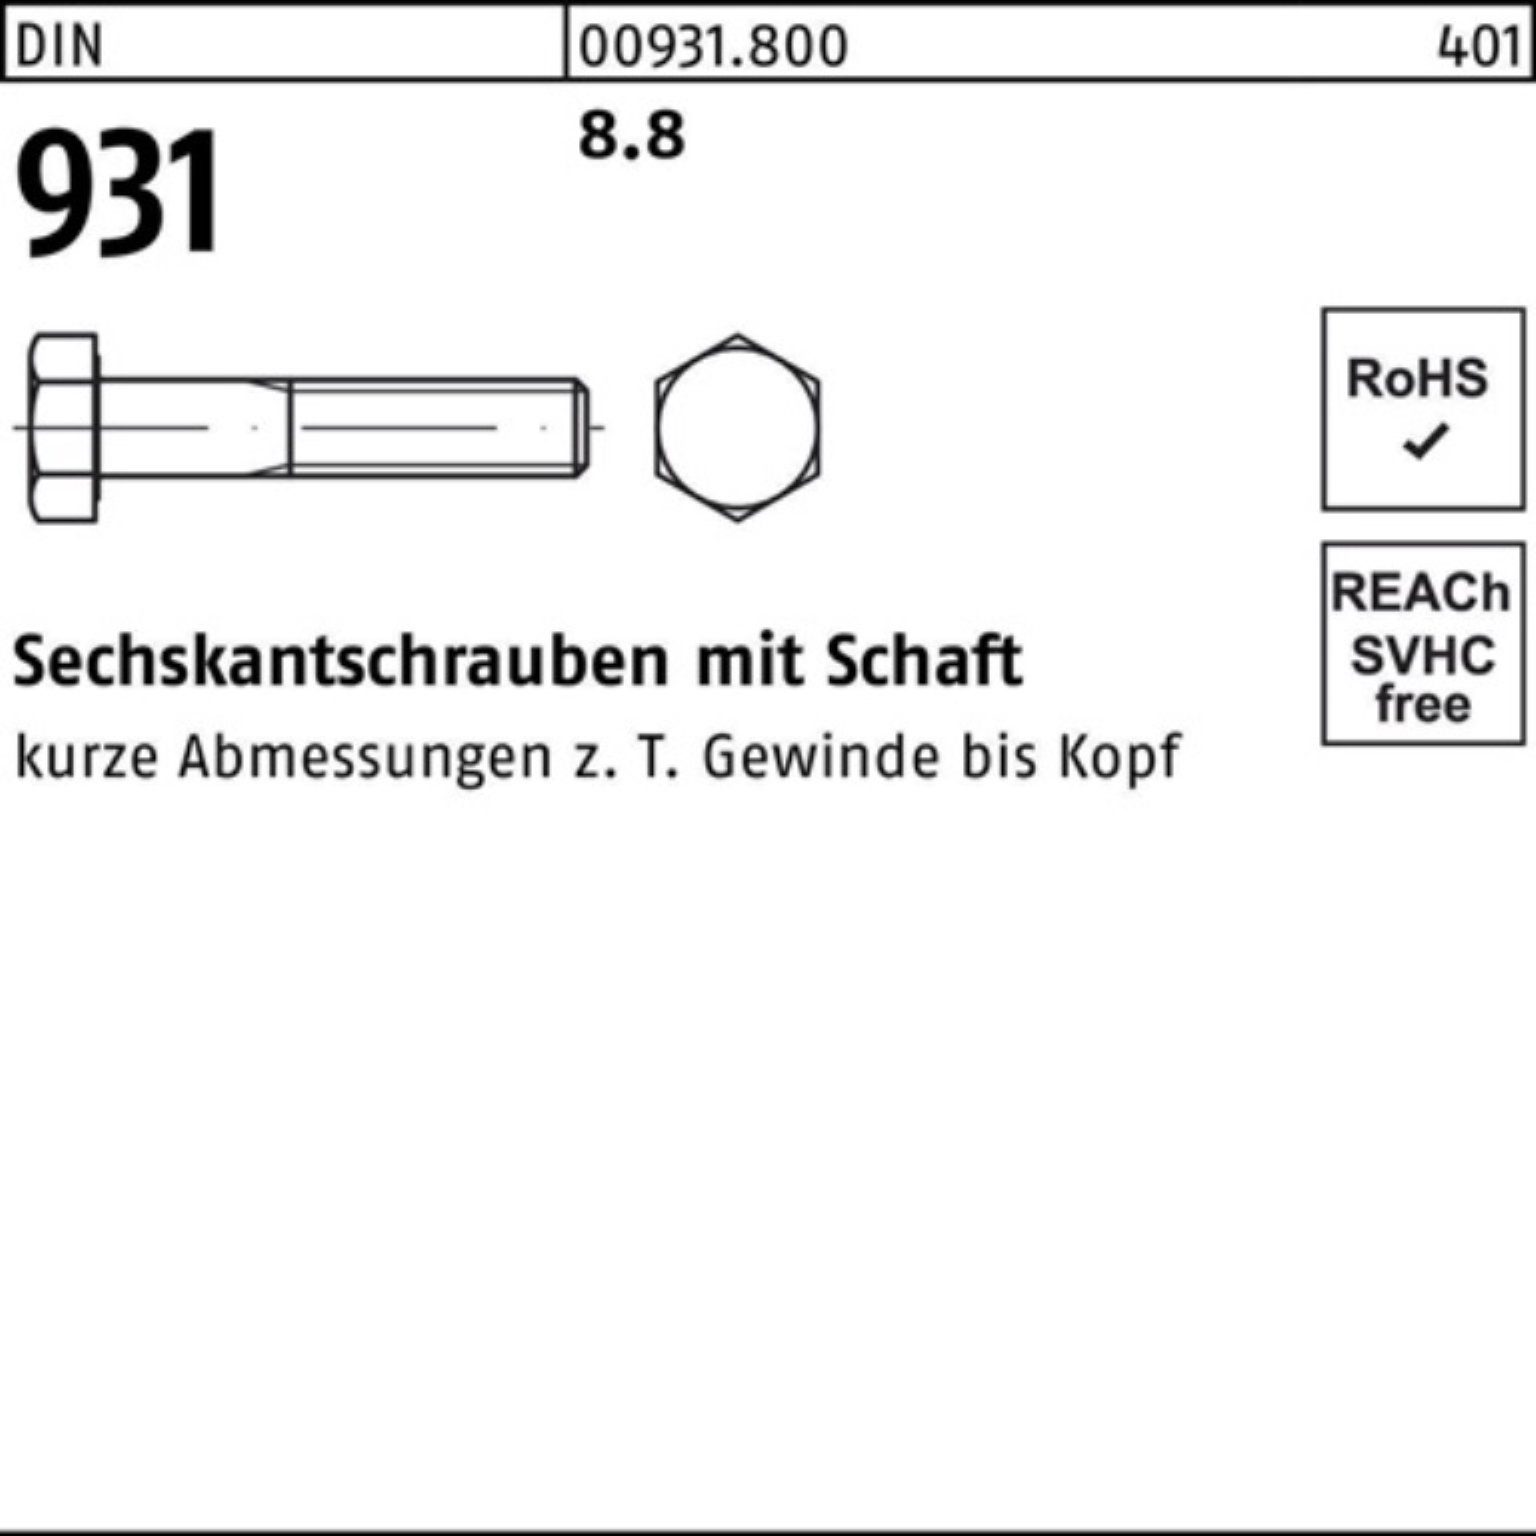 Super Sonderpreise Reyher Sechskantschraube 100er Stück 370 Sechskantschraube 1 8.8 Pack 931 M16x Schaft DIN DIN